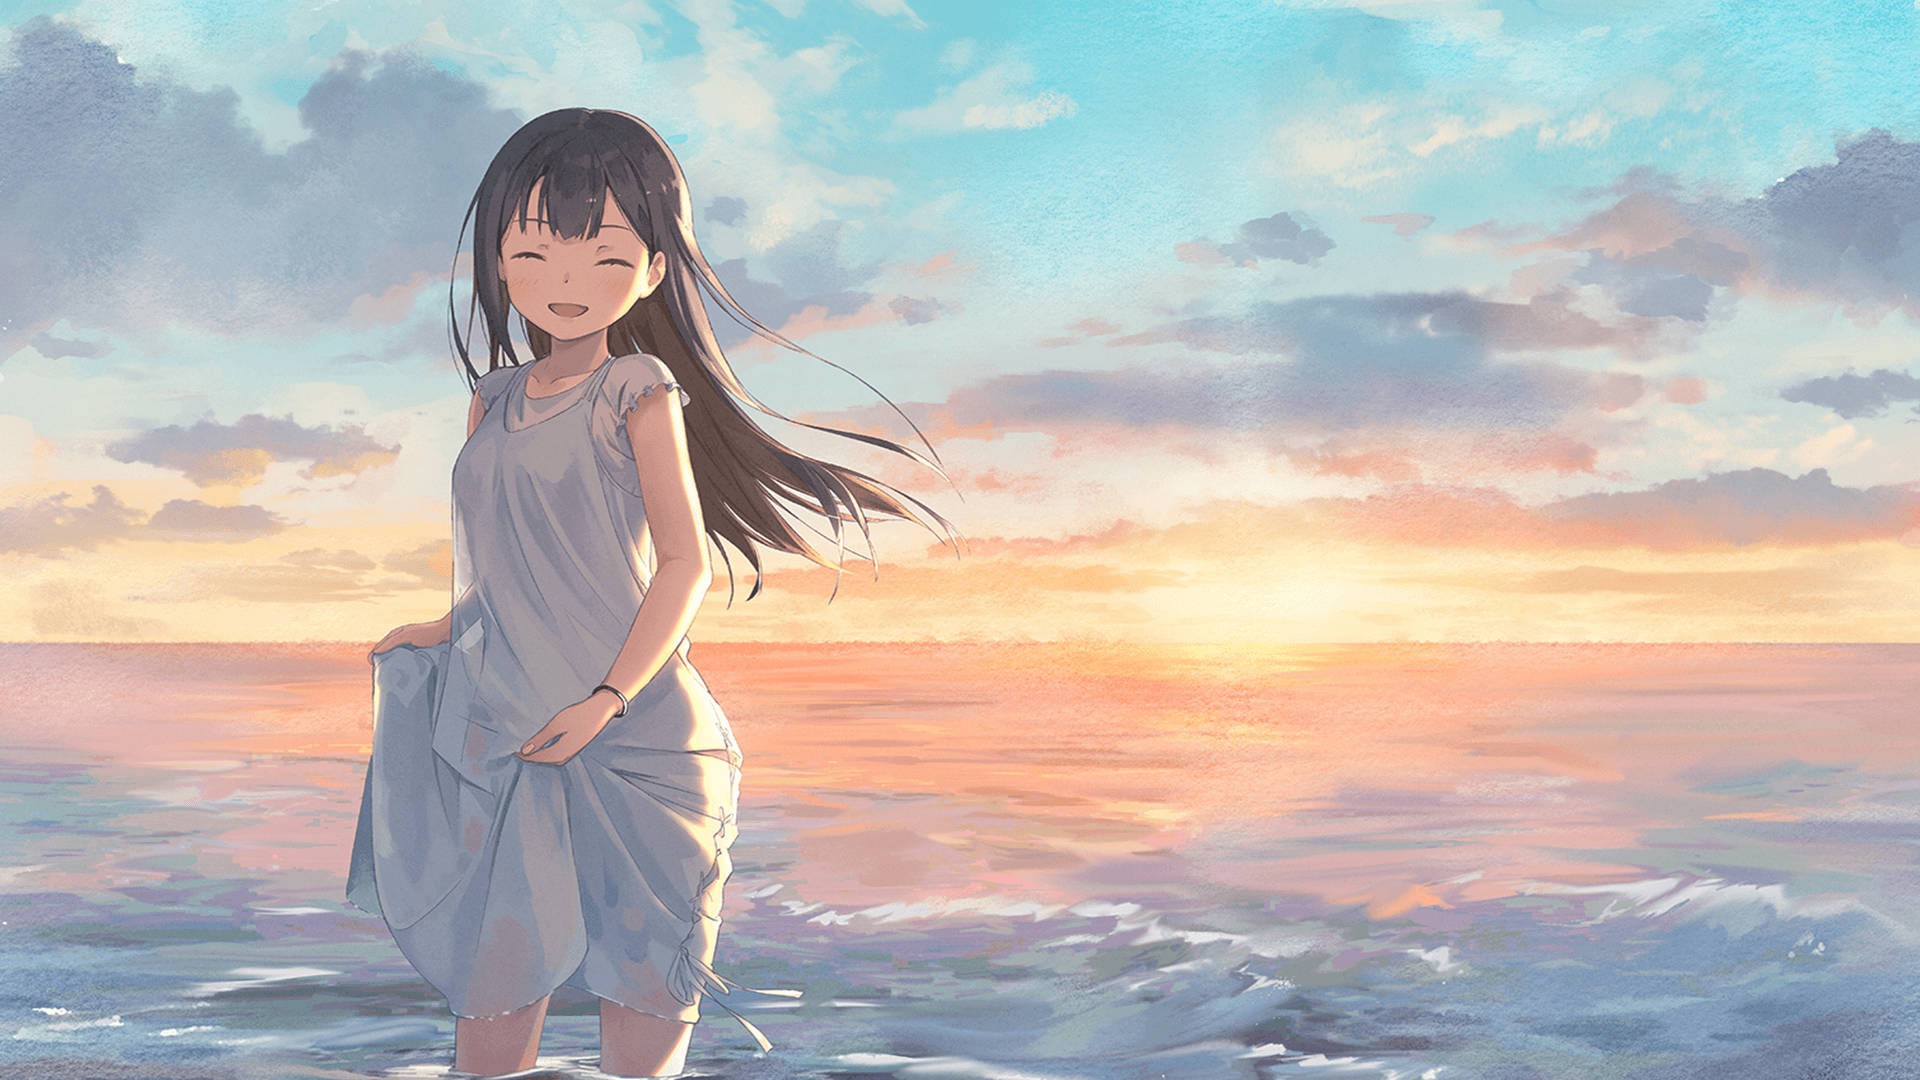 Download Girl At Sea Anime Aesthetic Sunset Wallpaper 